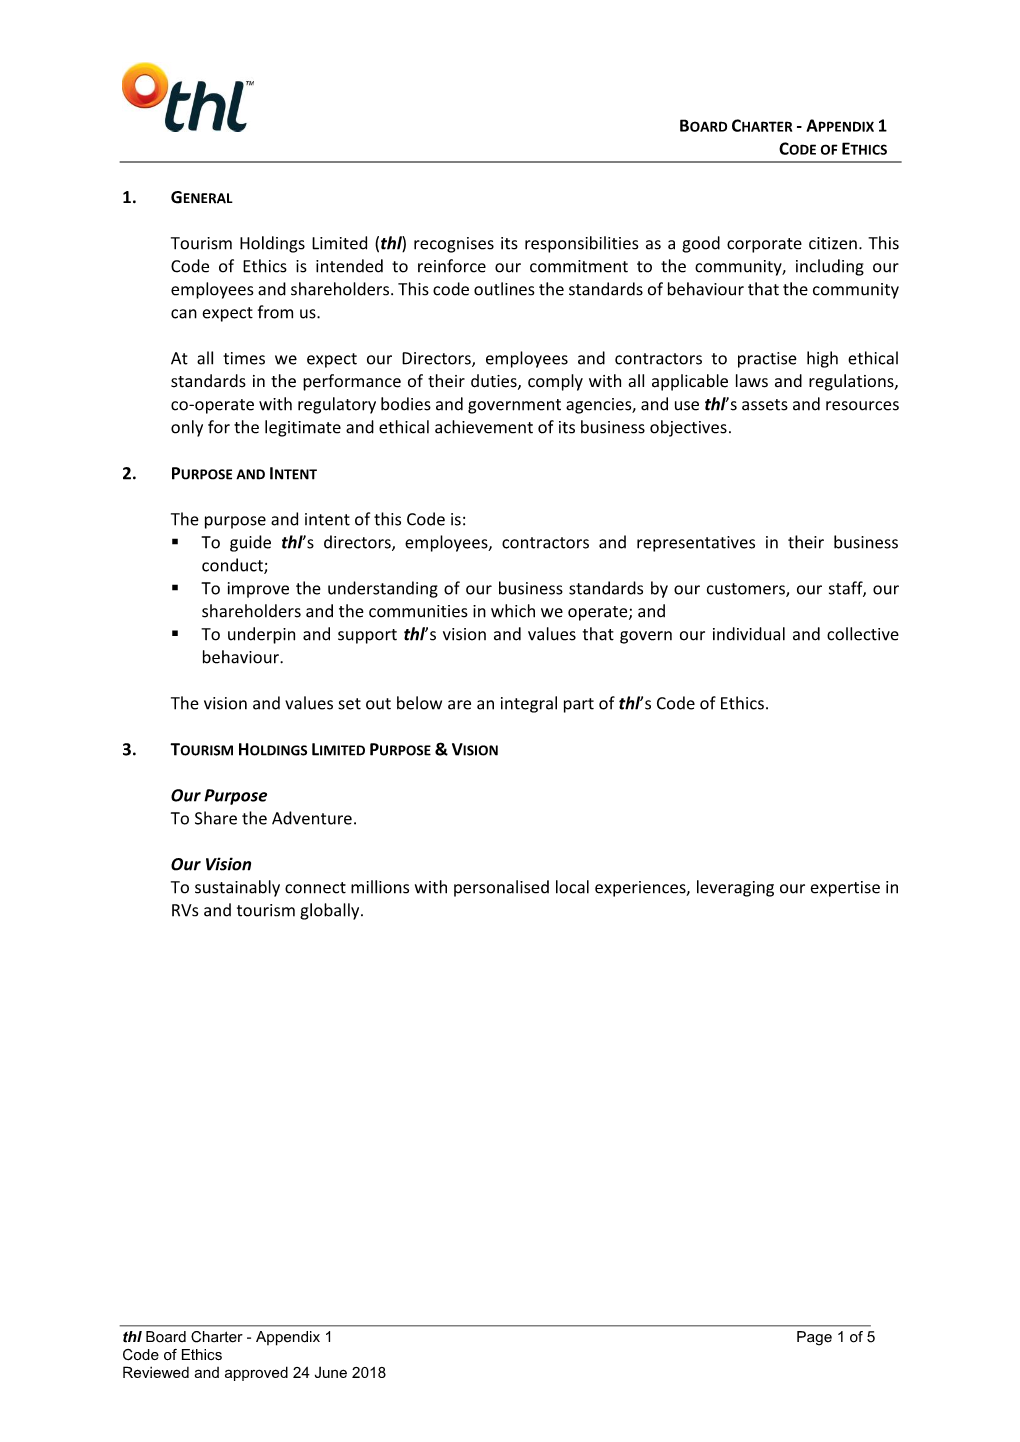 Board Charter - Appendix 1 Code of Ethics